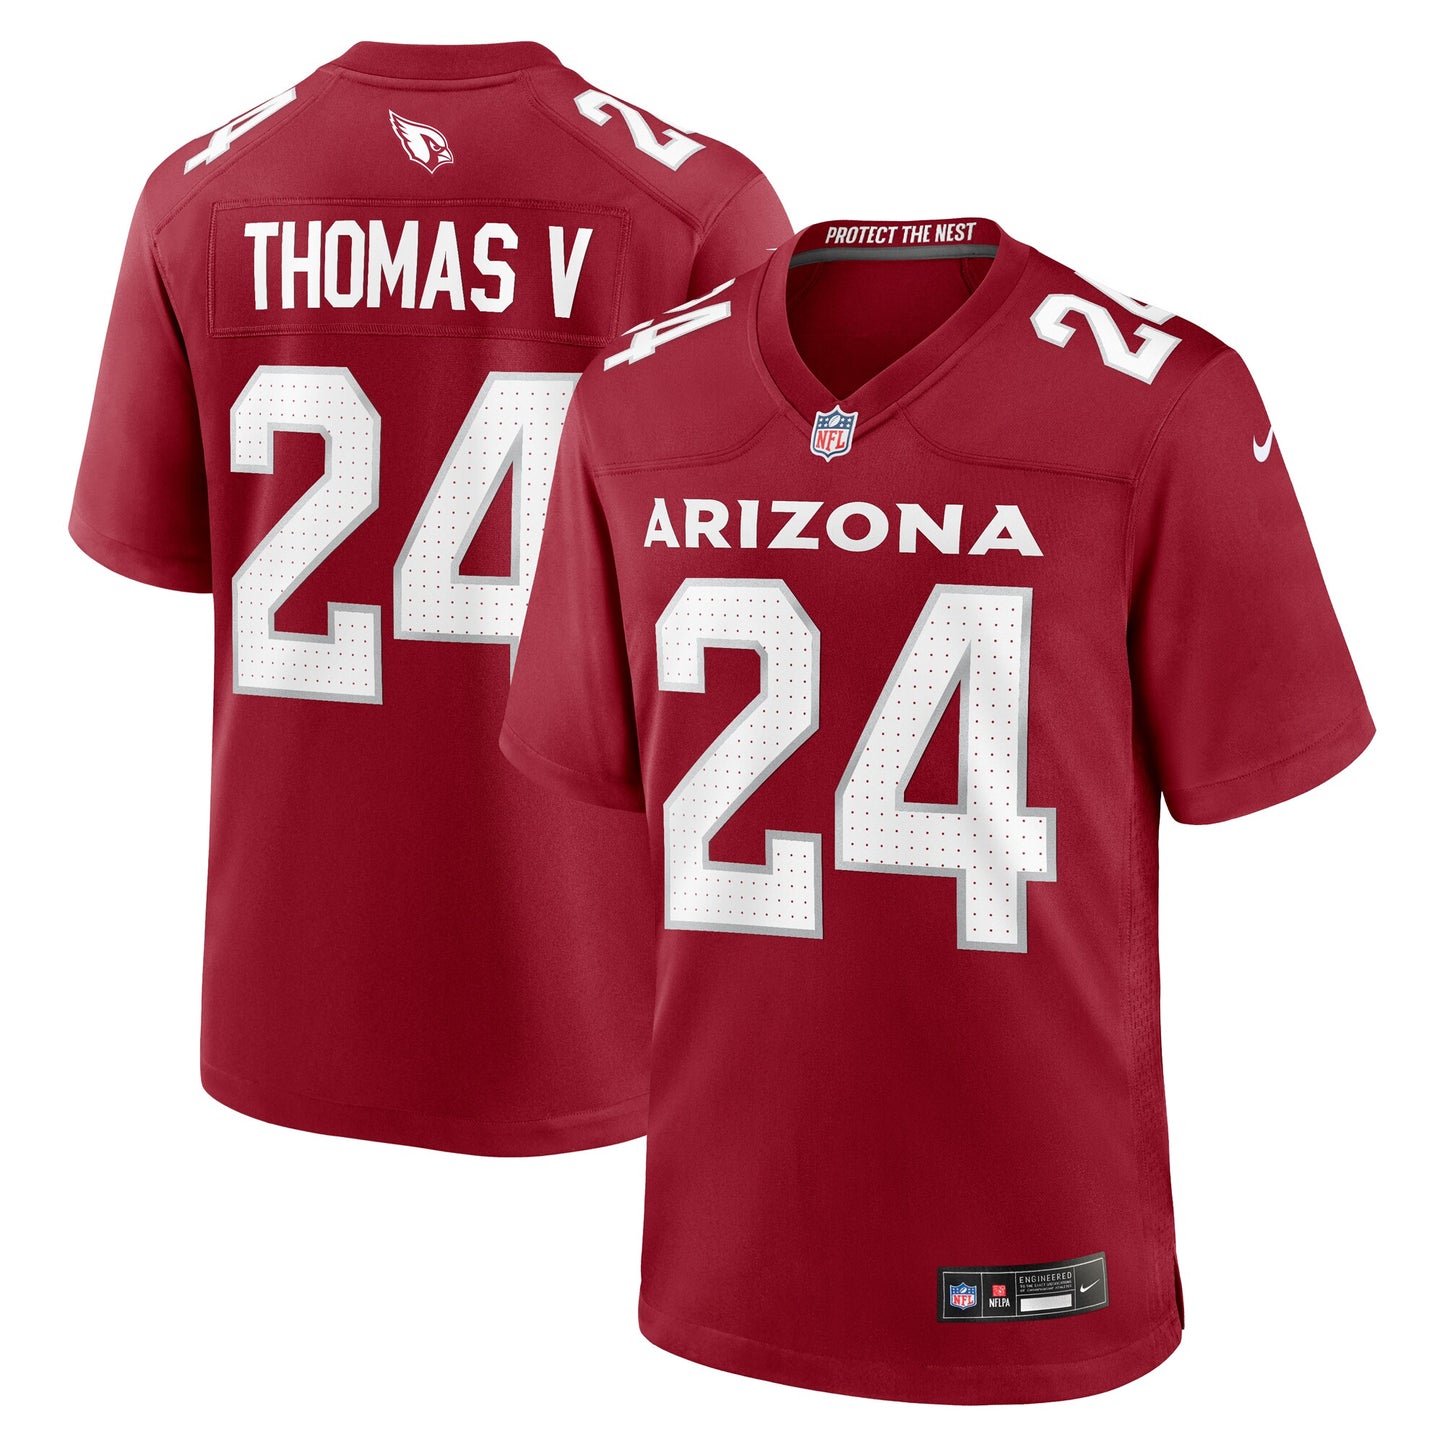 Starling Thomas V Arizona Cardinals Nike Team Game Jersey - Cardinal